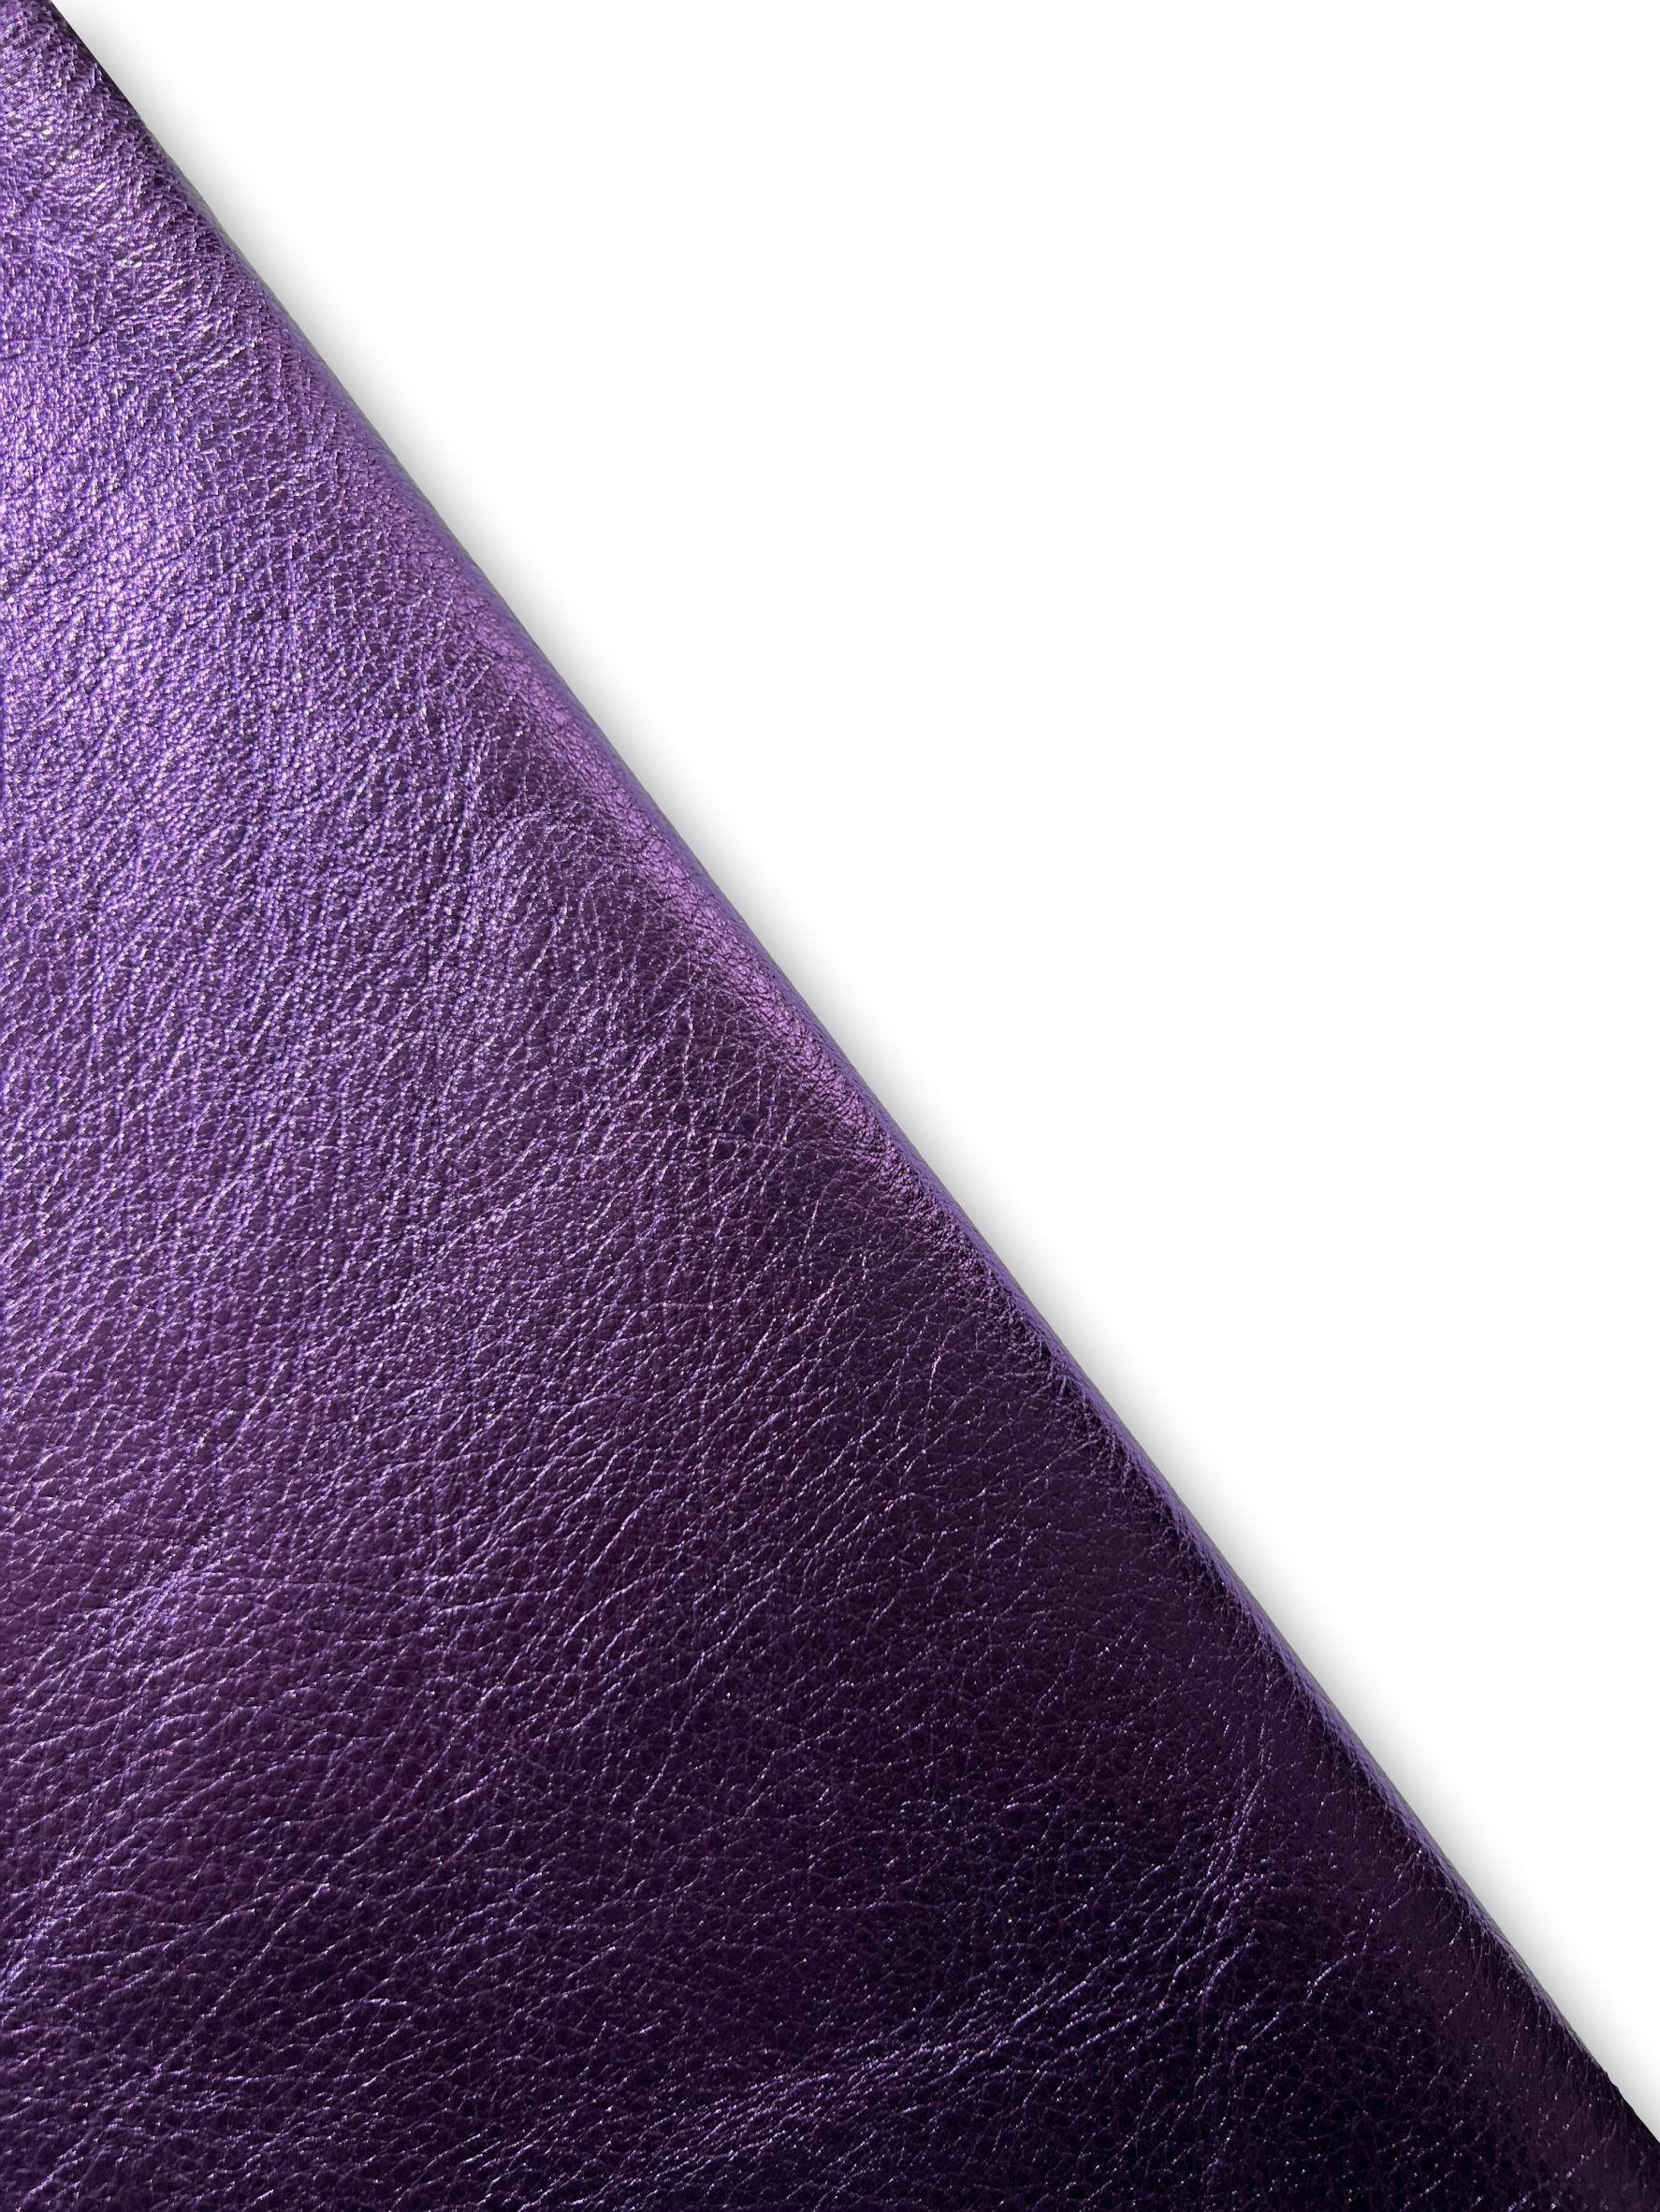 Leather Cowhide Skins Metallic TanneryNYC – Purple